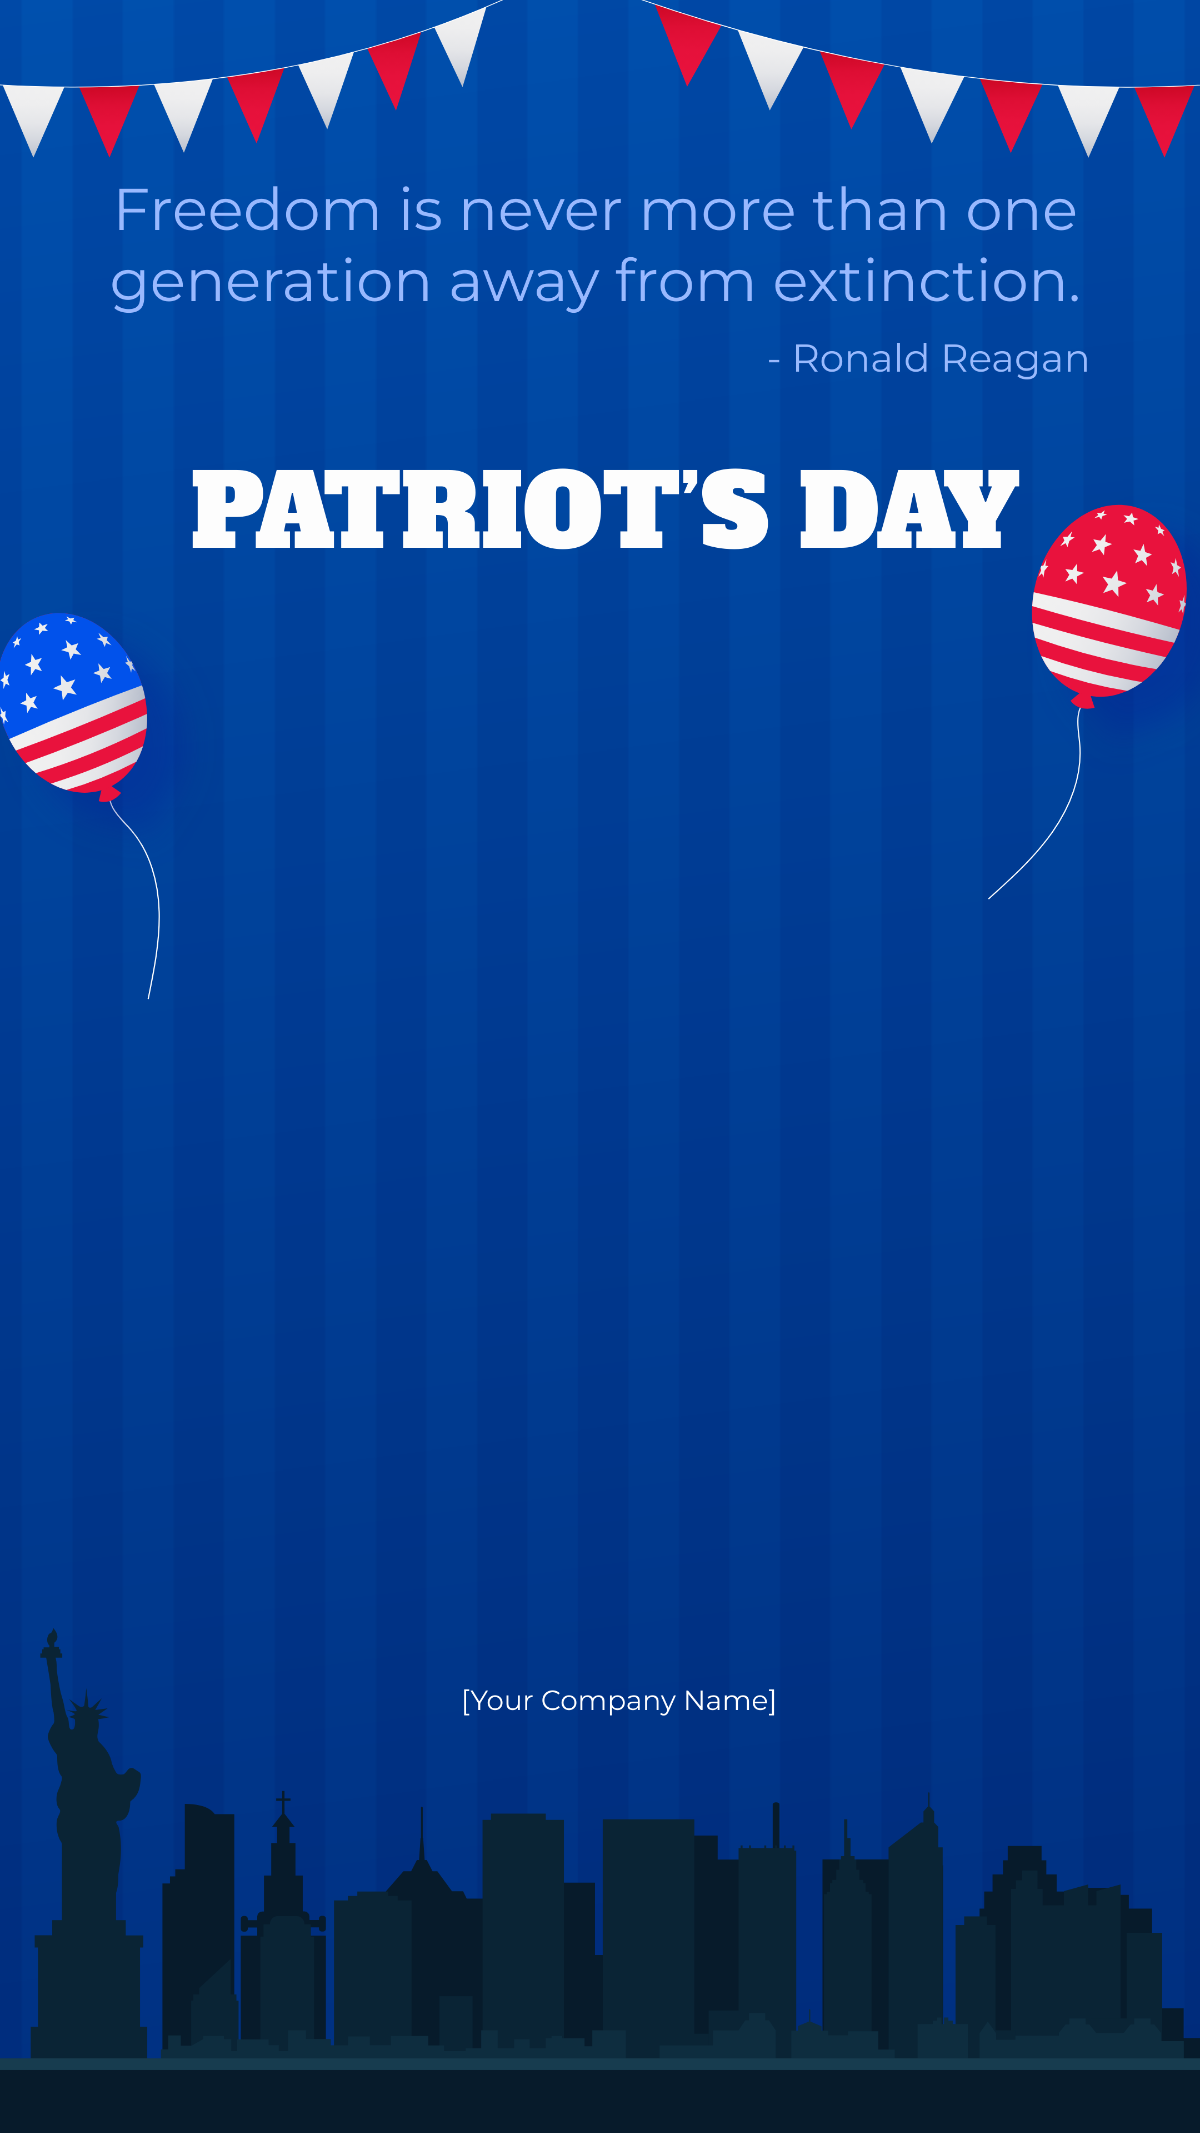 Patriot's Day Instagram Template